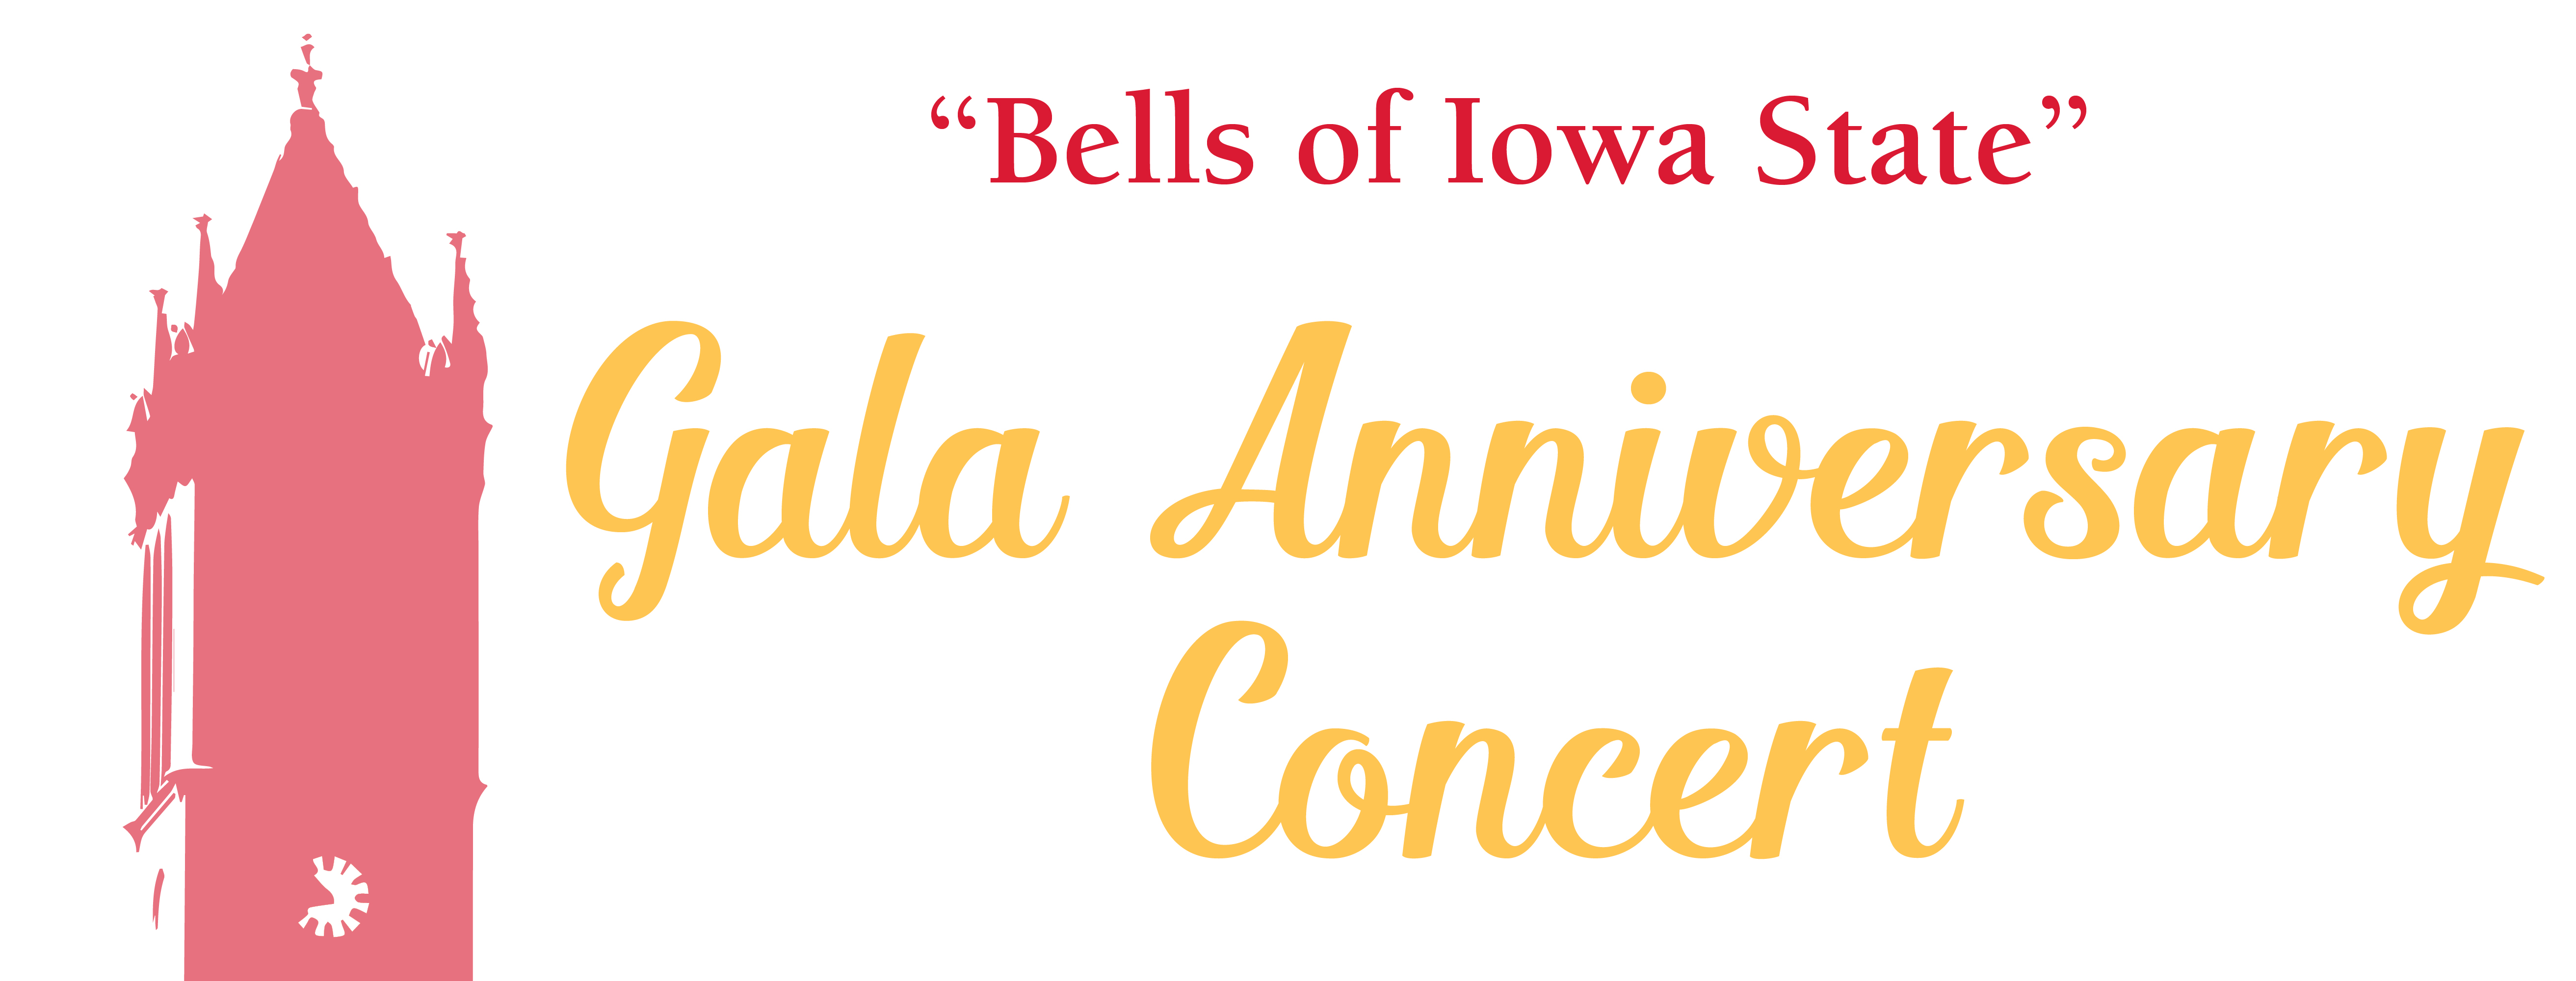 The "Bells of Iowa State" Anniversary Gala Concert